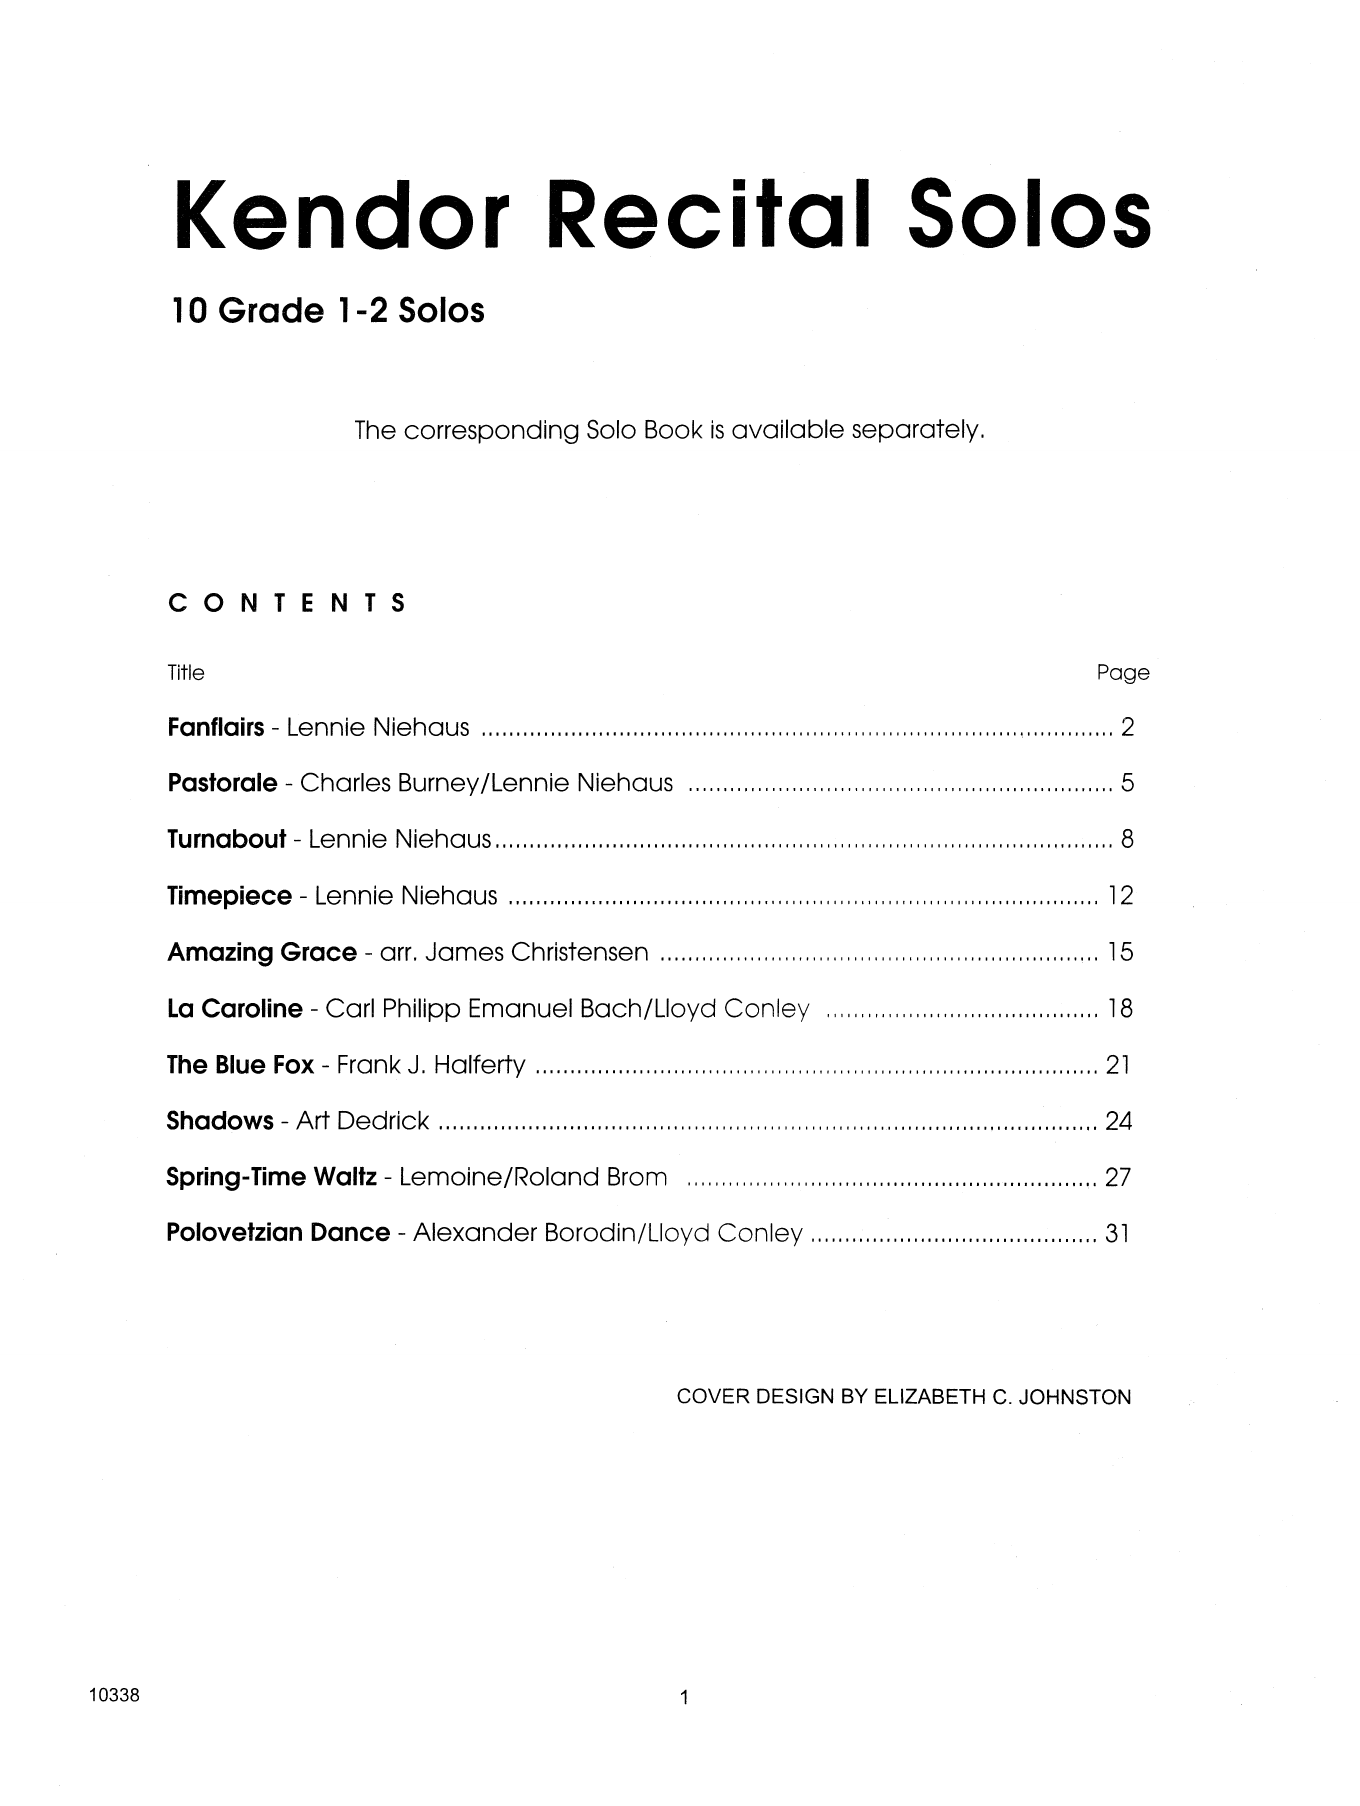 Download Various Kendor Recital Solos - Tenor Saxophone Sheet Music